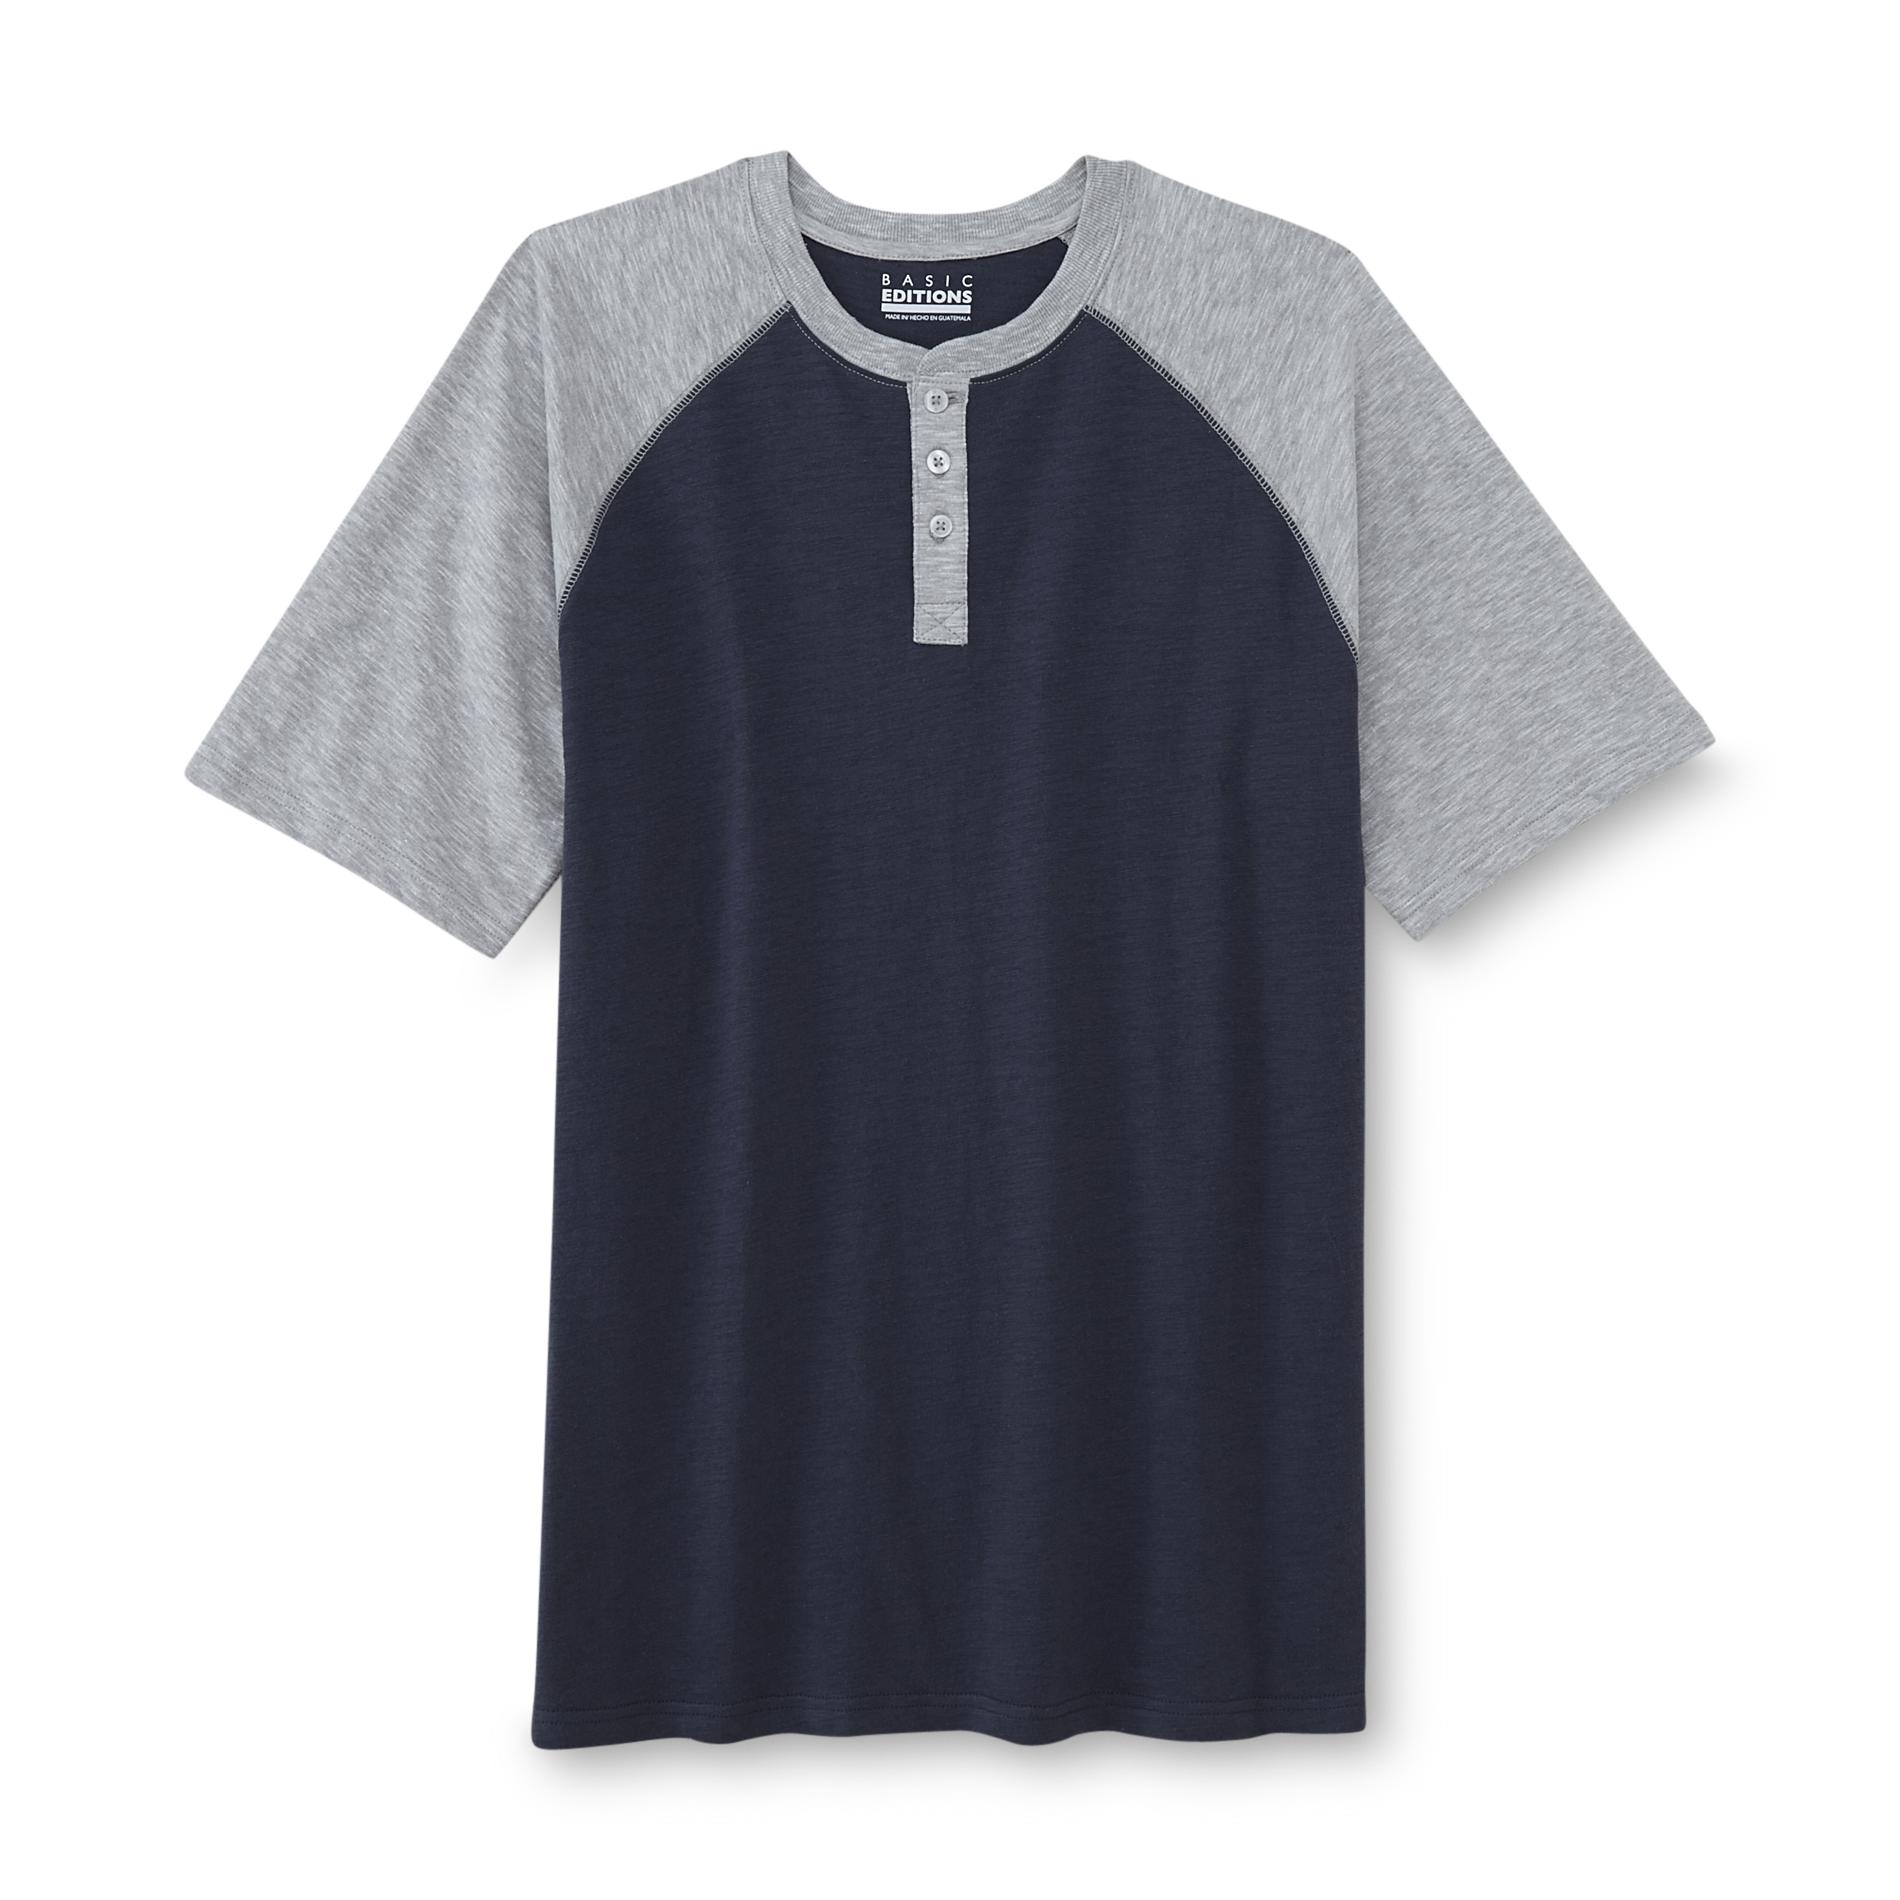 Basic Editions Men's Big & Tall Henley Shirt - Colorblock